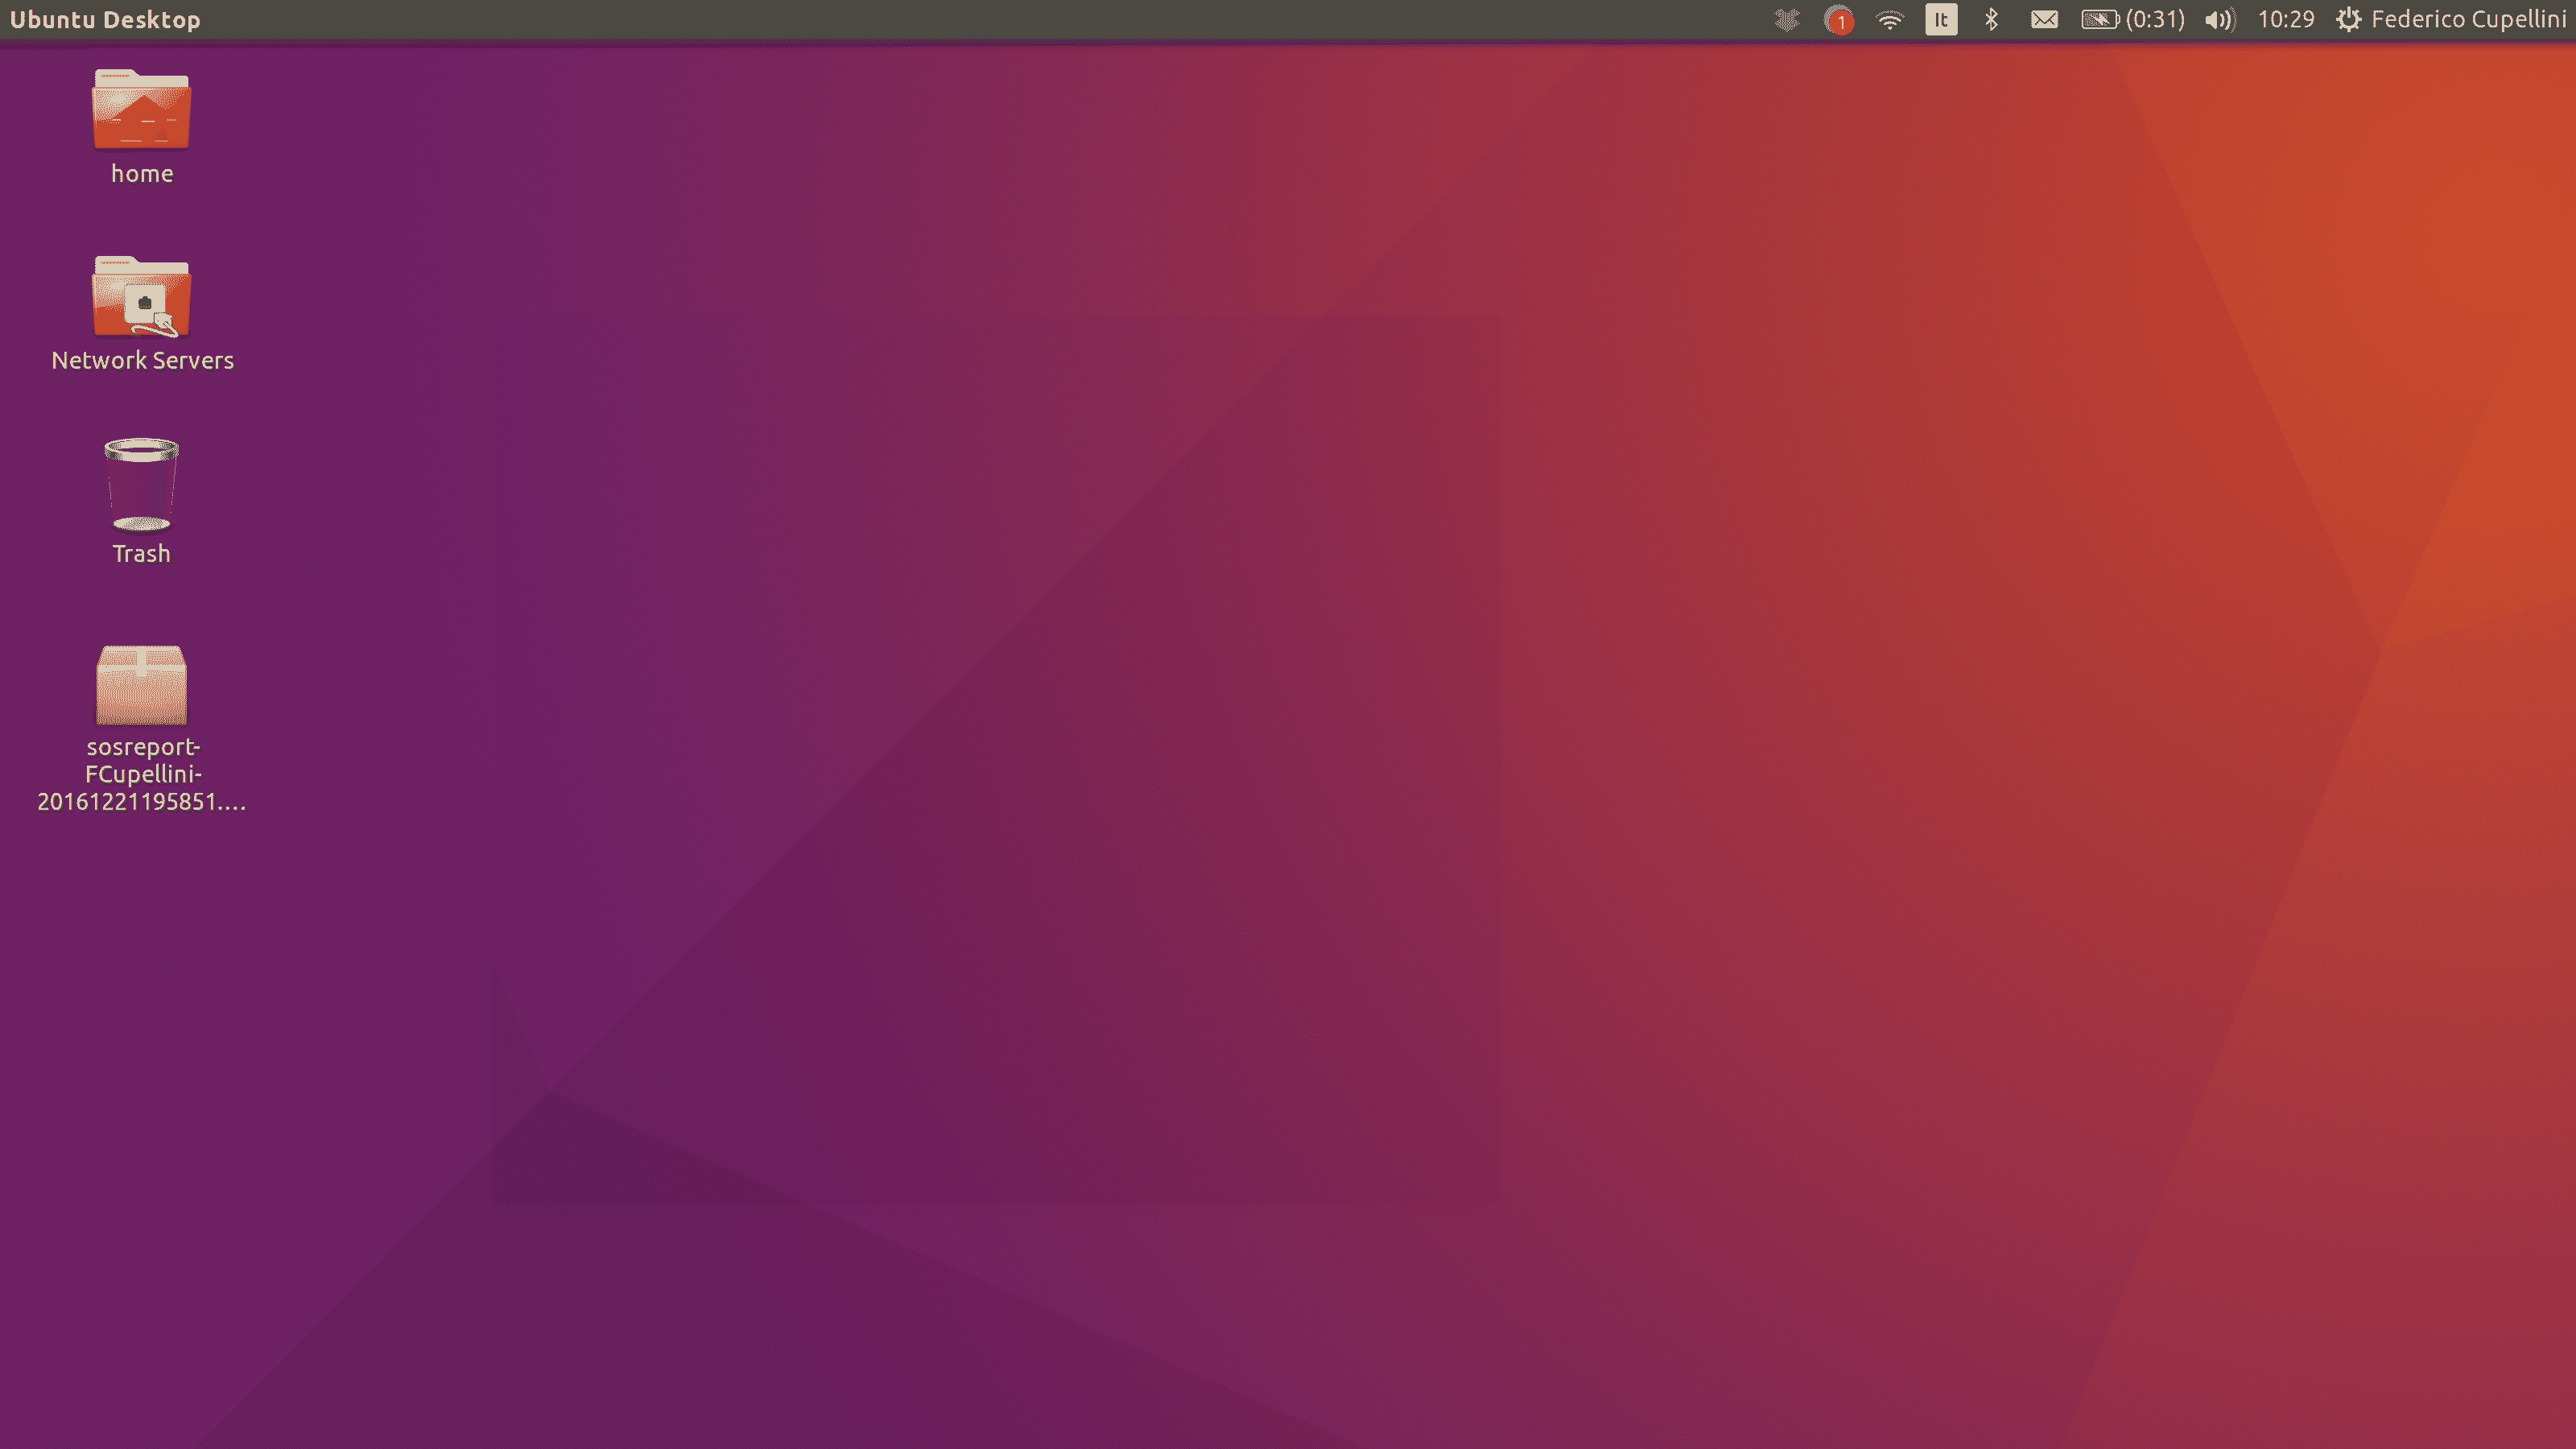 How To Install Ubuntu On Windows 10 In Simple Steps - 44